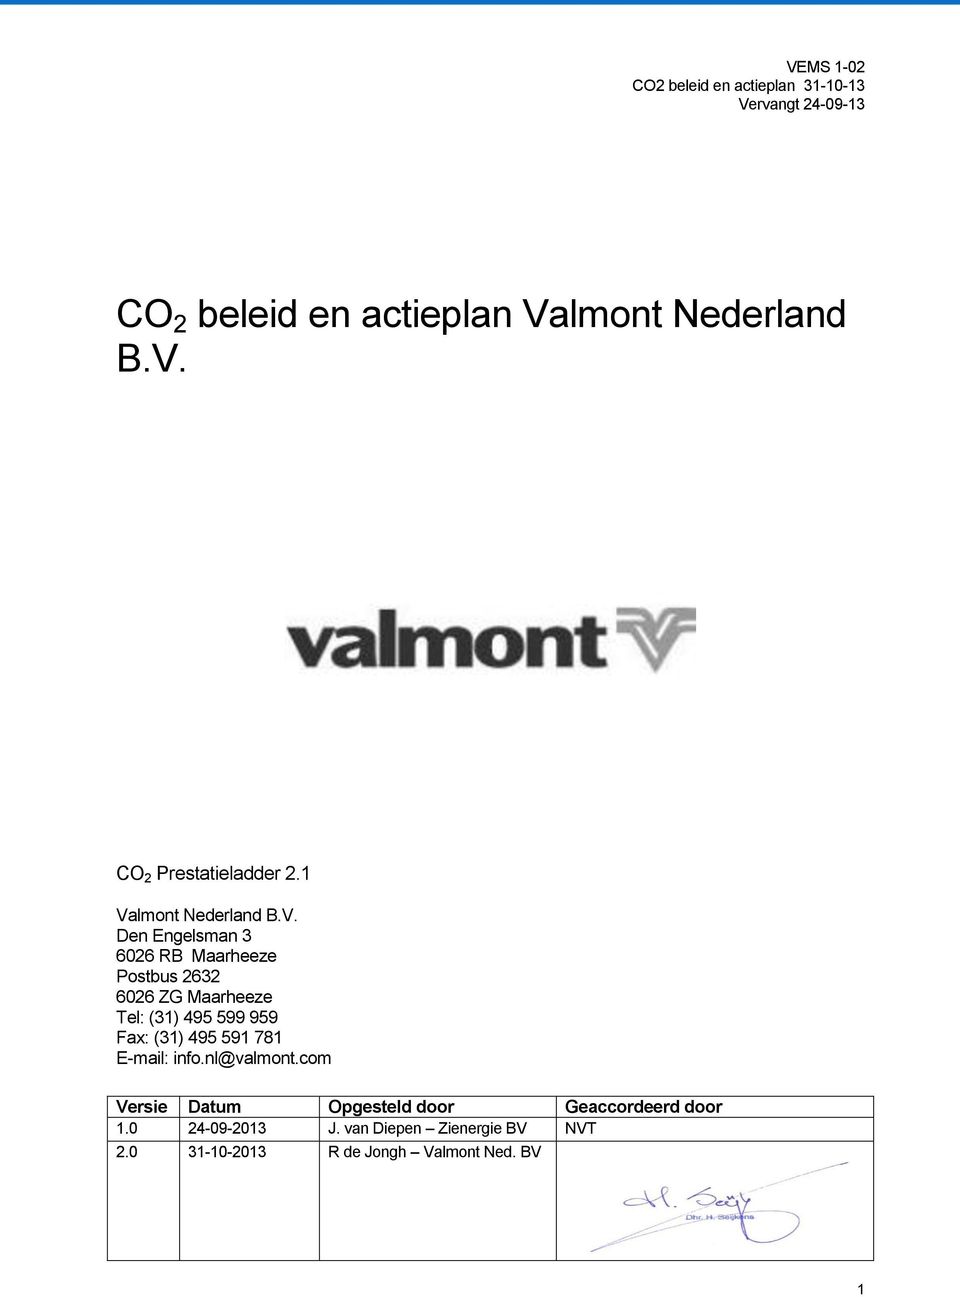 Tel: (31) 495 599 959 Fax: (31) 495 591 781 E-mail: info.nl@valmont.